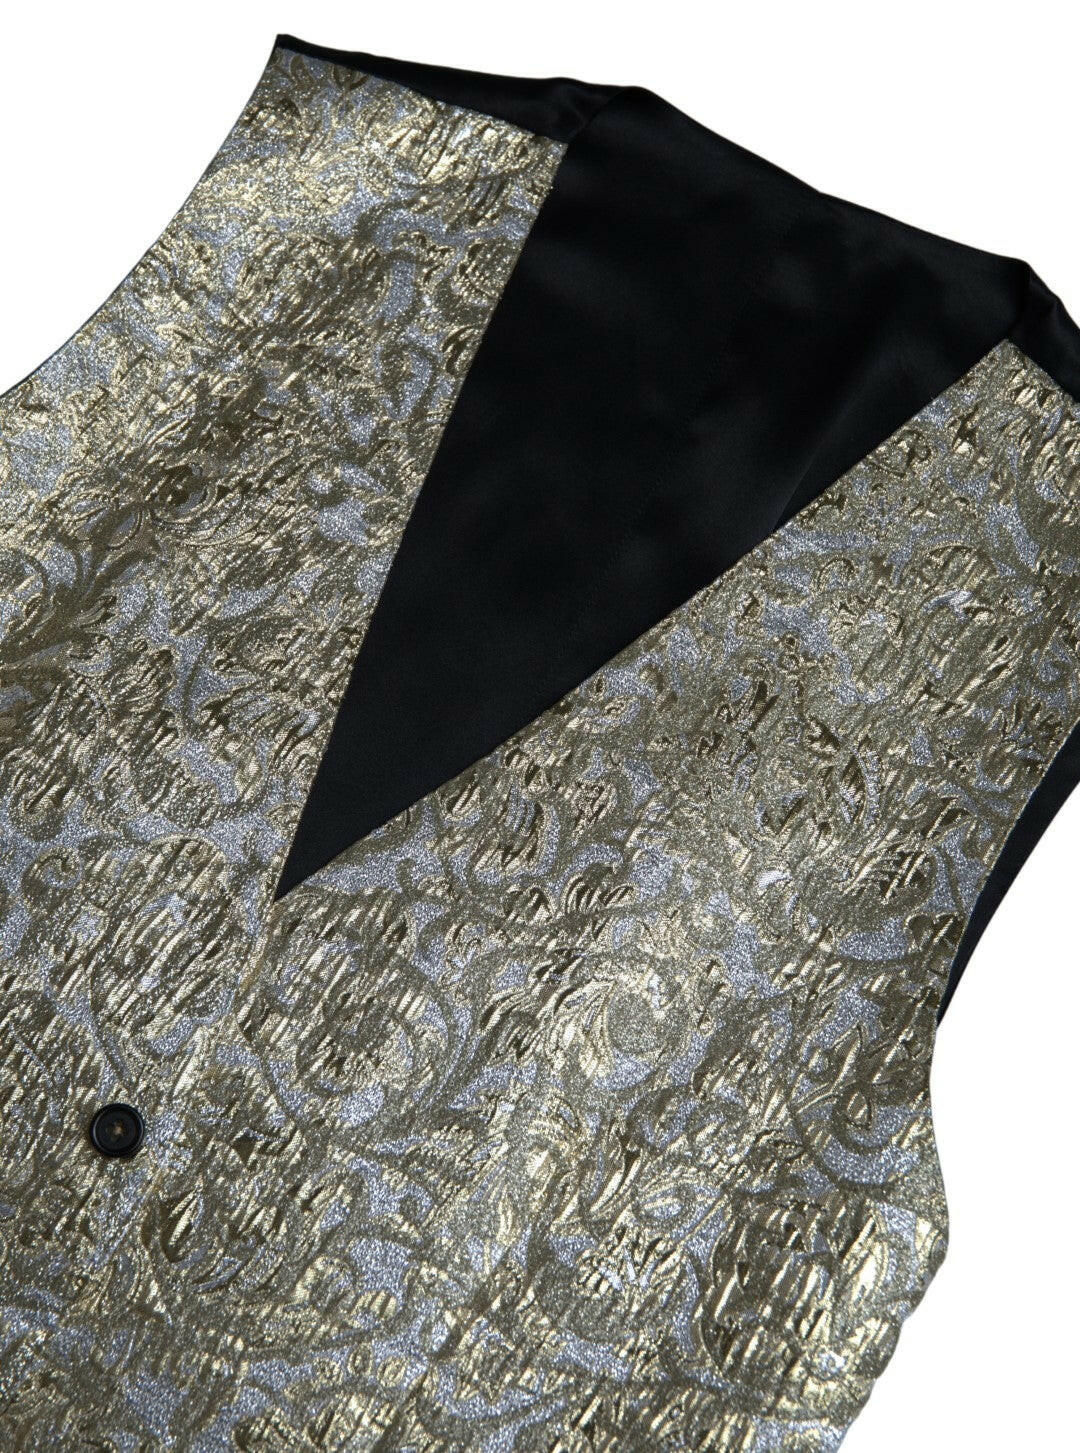 Dolce & Gabbana Floral Jacquard Waistcoat Formal Gold Vest - GENUINE AUTHENTIC BRAND LLC  